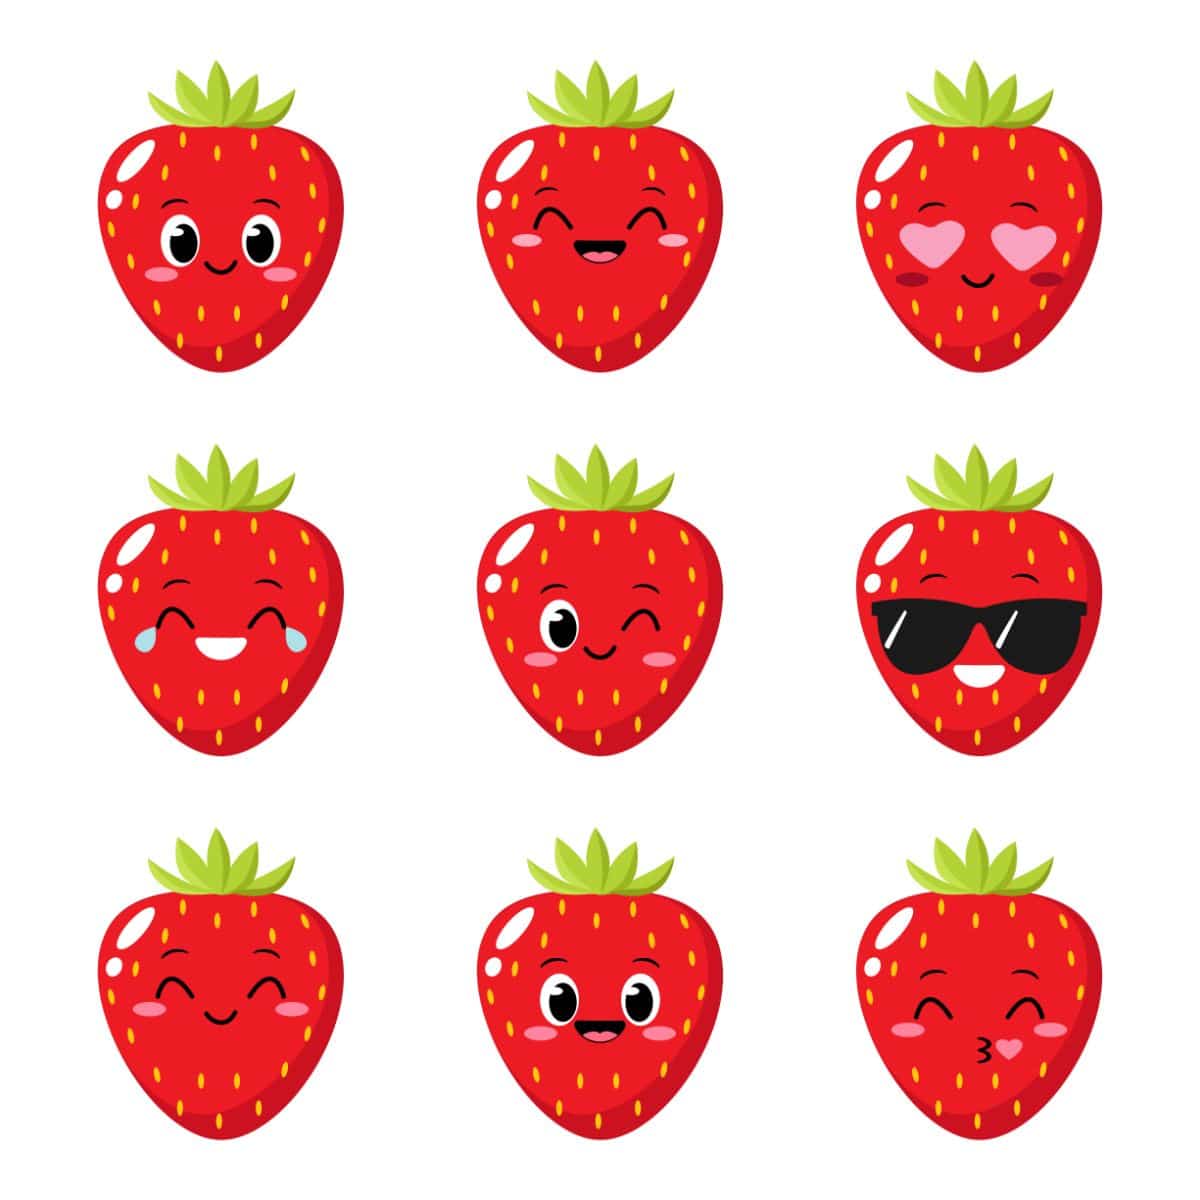 Strawberry inspired emojis